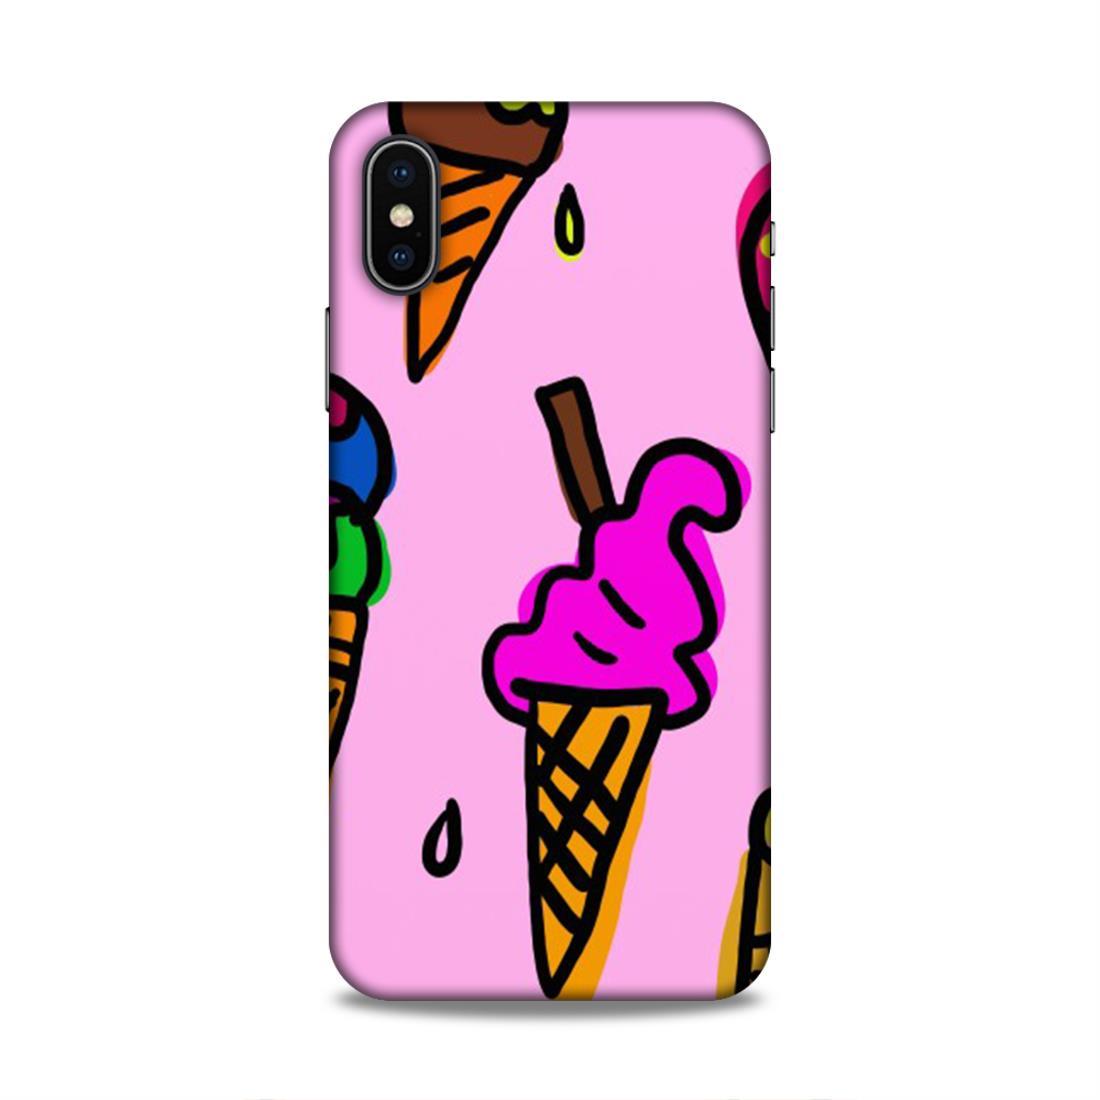 Icecream Pink iPhone X Phone Cover